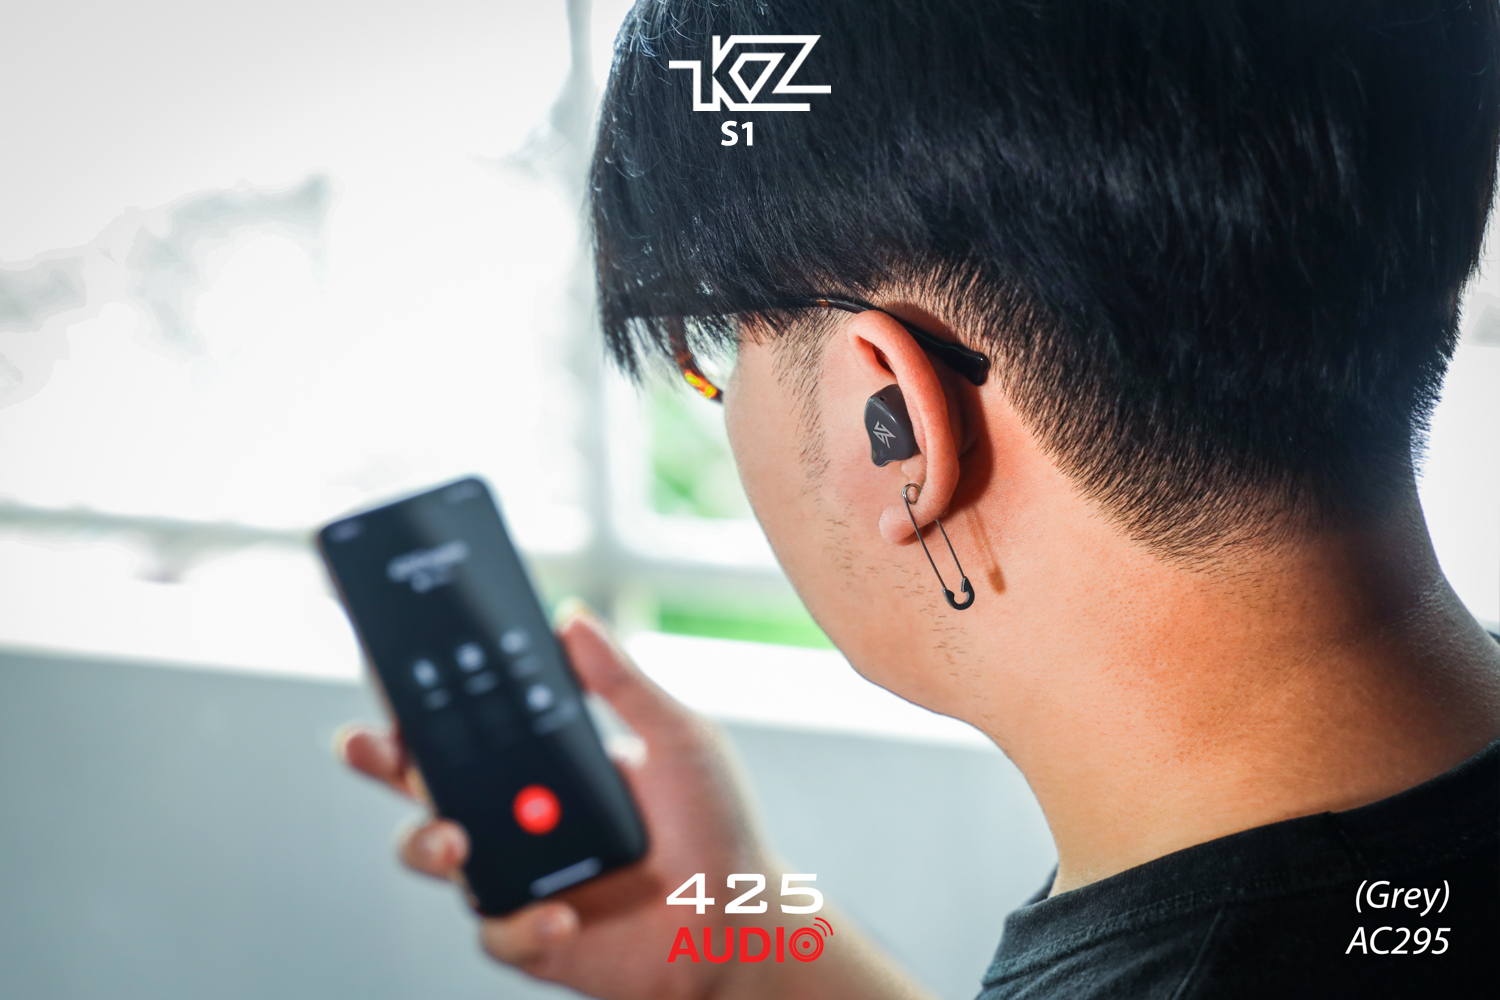 kz,s1,หูฟังไร้สาย,bluetooth,5.0,true wireless,ดีเลย์น้อย,เสียงดี,ดูหนังได้